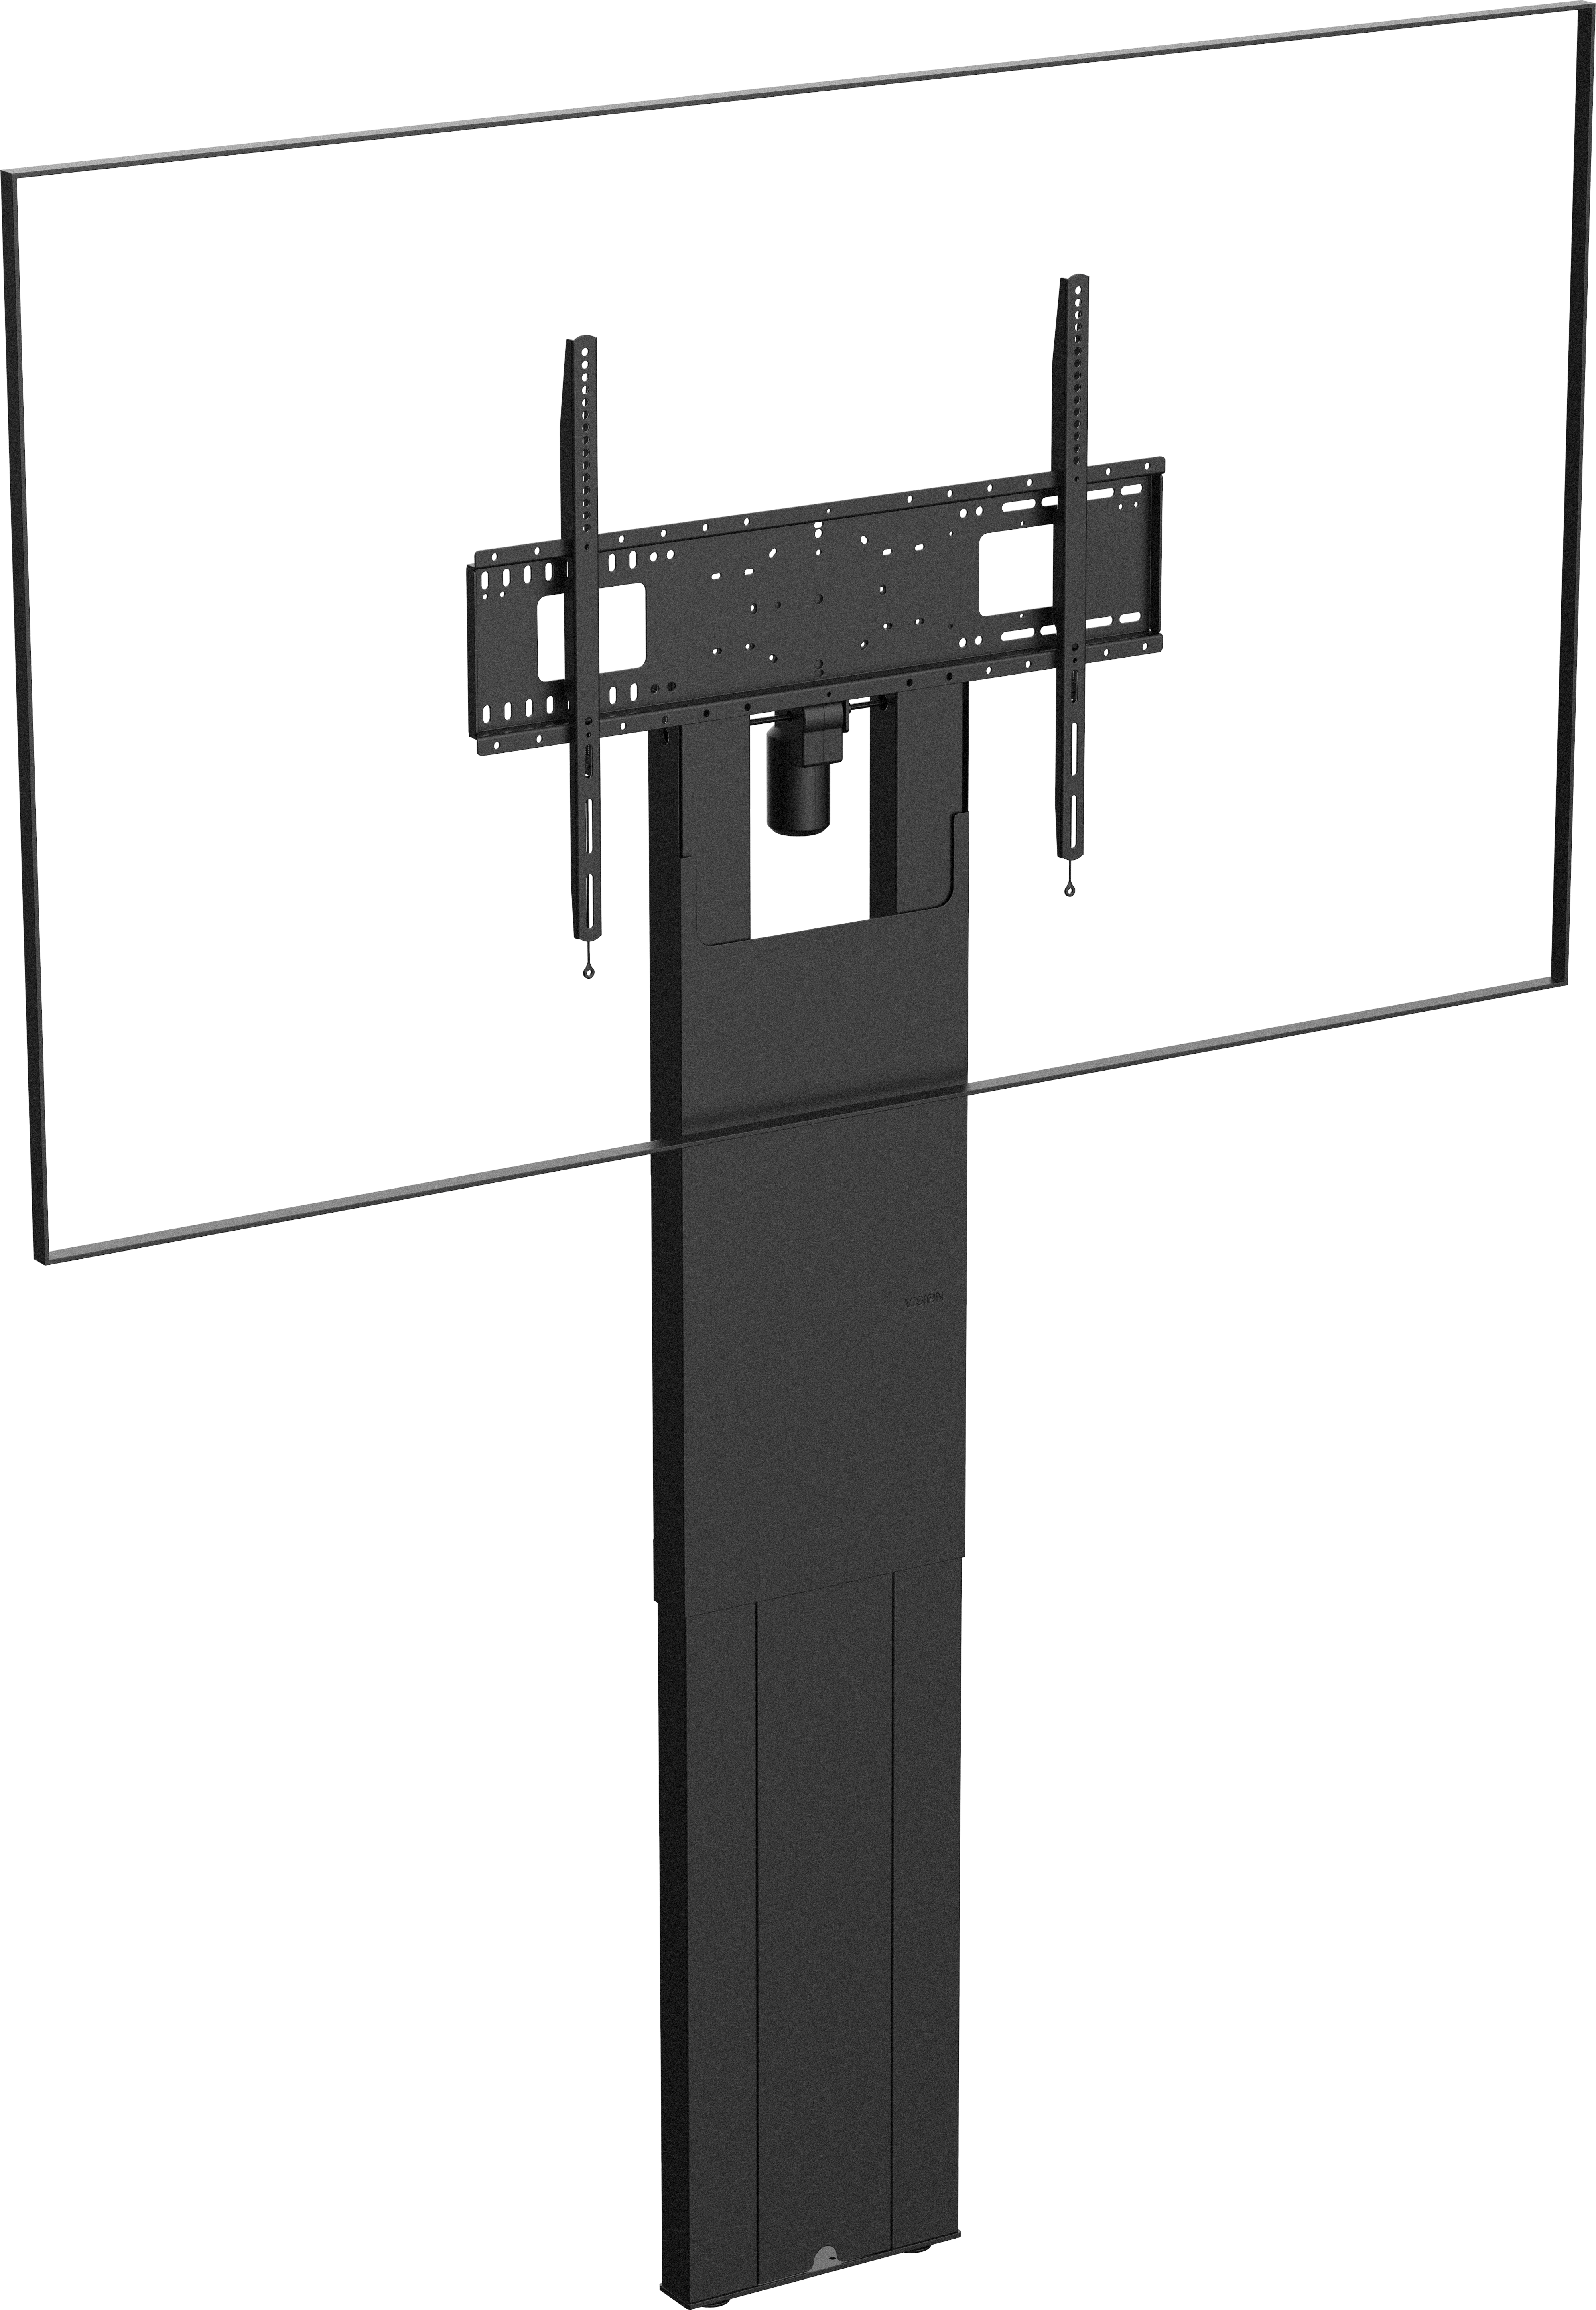 An image showing gemotoriseerde vloerstandaard voor flatscreens